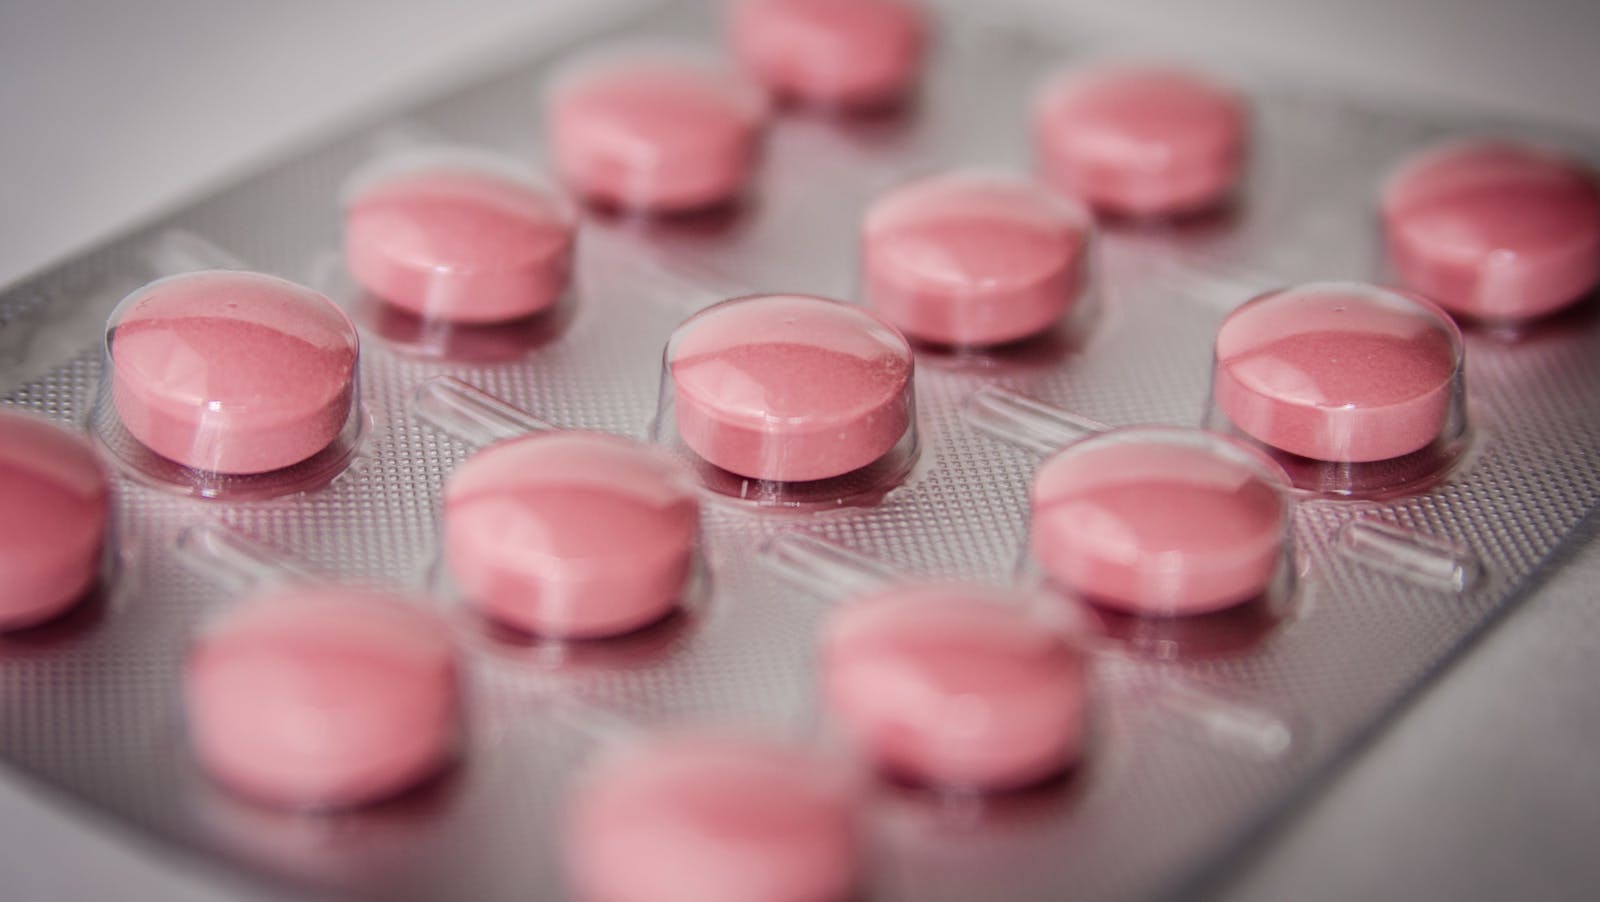 Pink Round Medication Pill